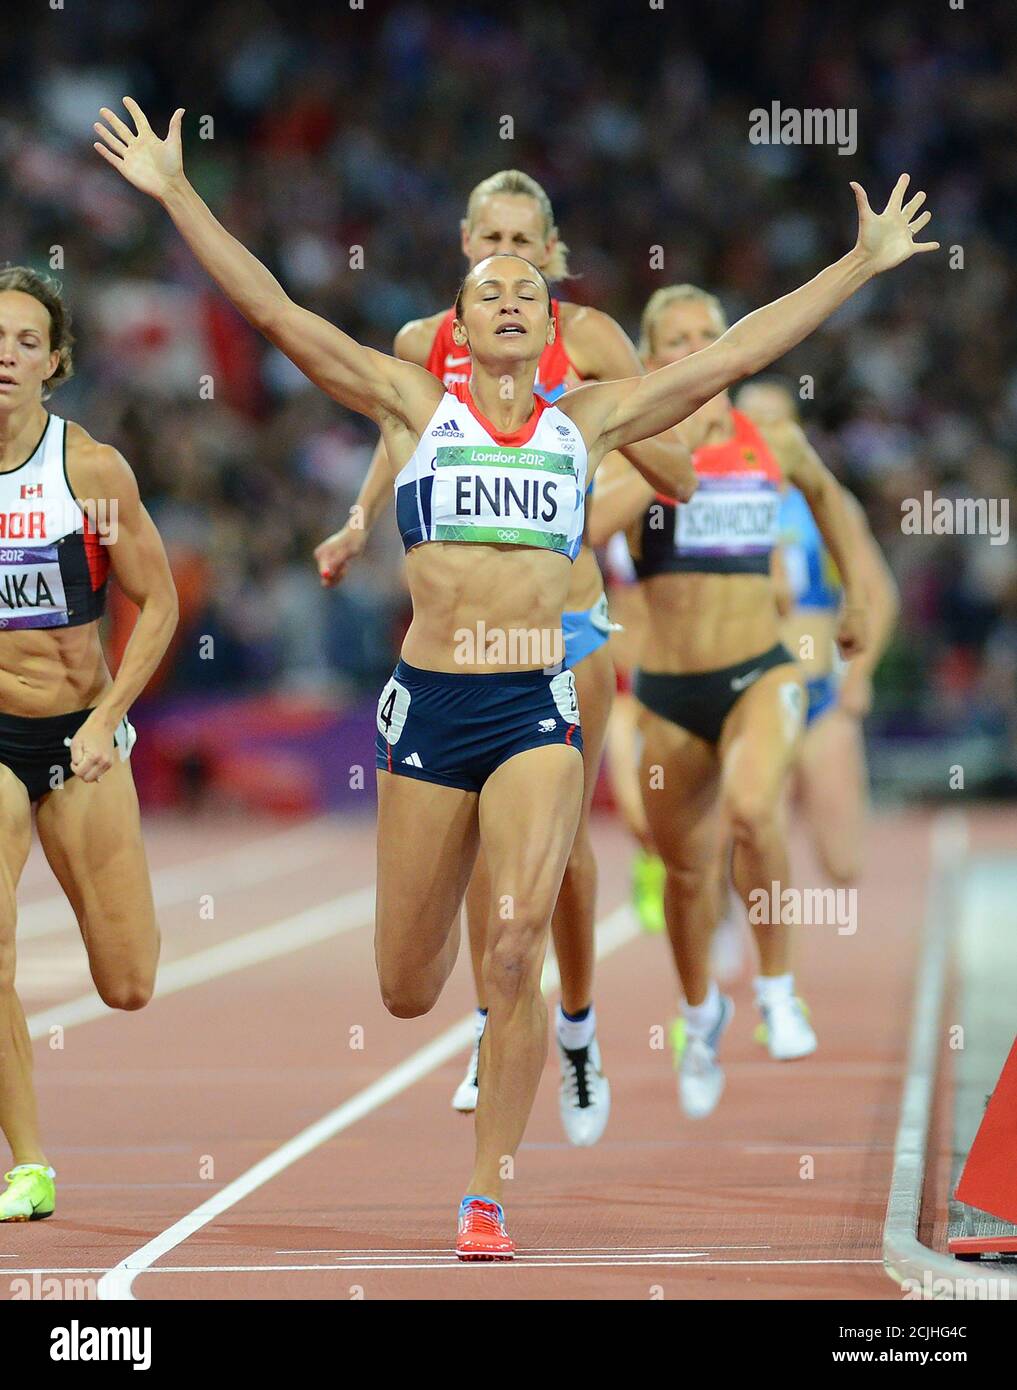 Jessica Ennis aus Großbritannien feiert den Gewinn der Goldmedaille bei den Frauen Heptathalon 2012 London Olympics Bildquelle : MARK PAIN / ALAMY Stockfoto